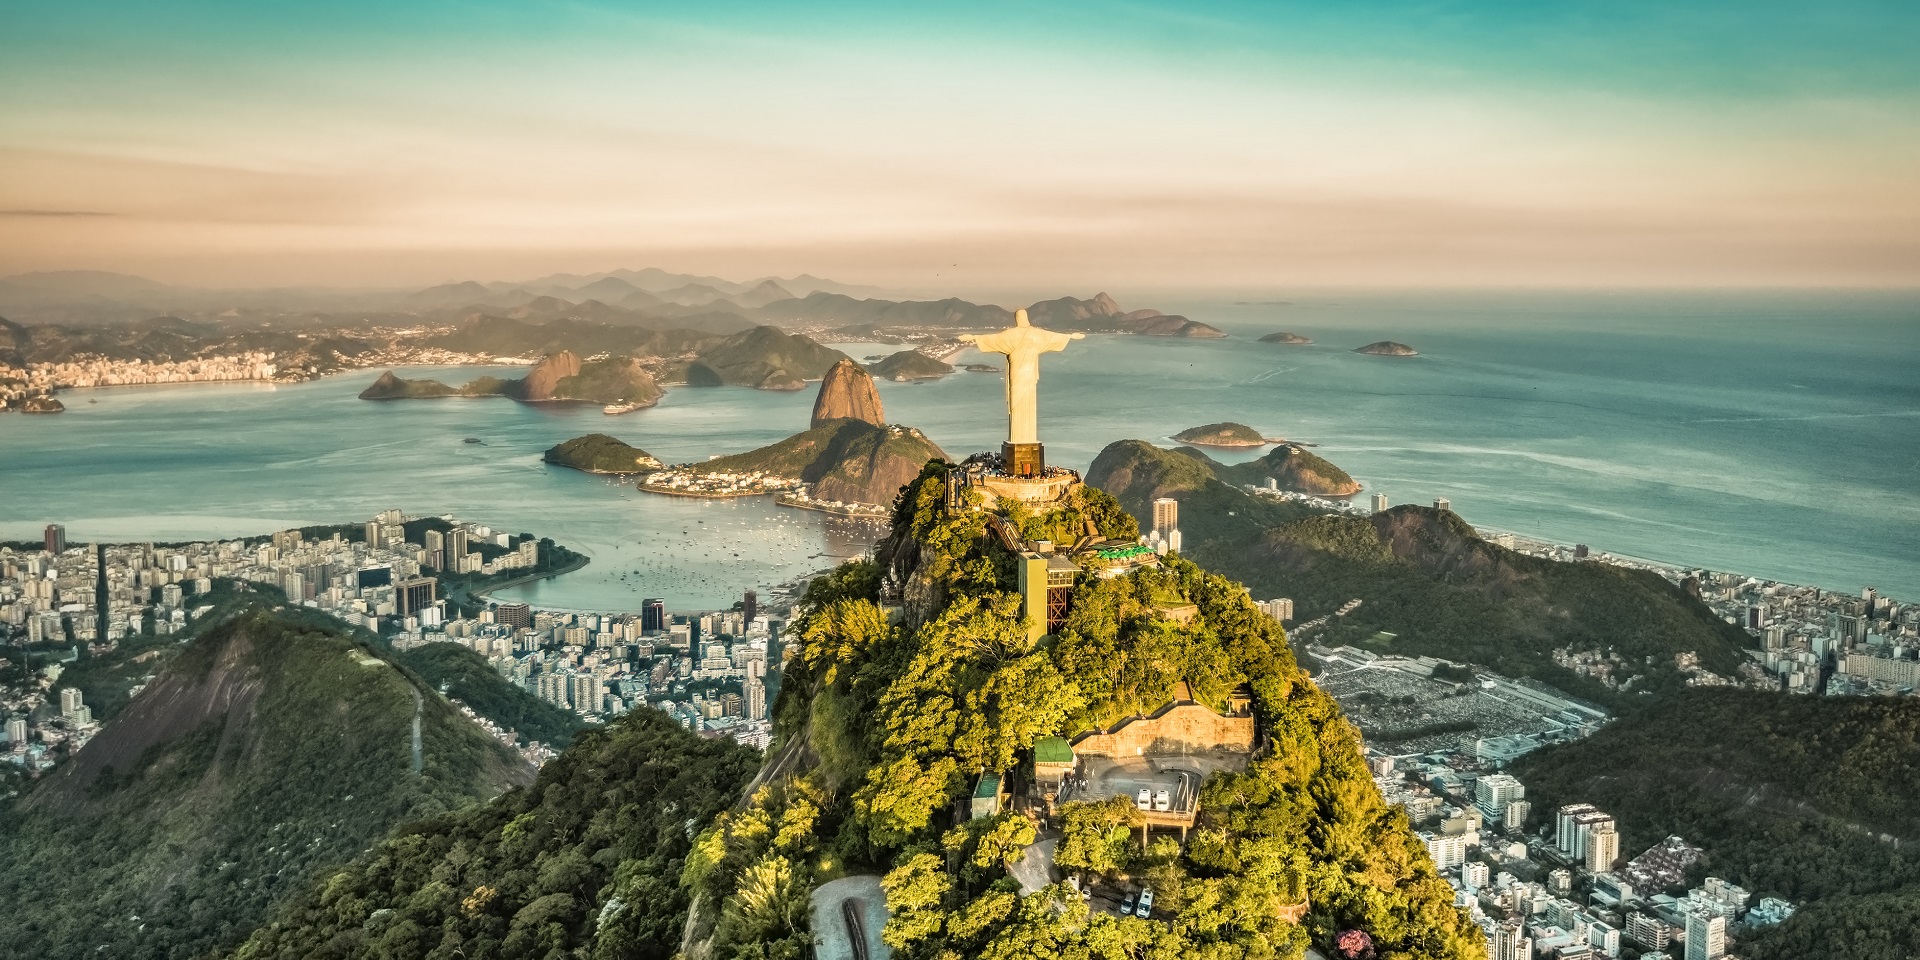 Statue of Christ the Redeemer overlooking Rio de Janeiro